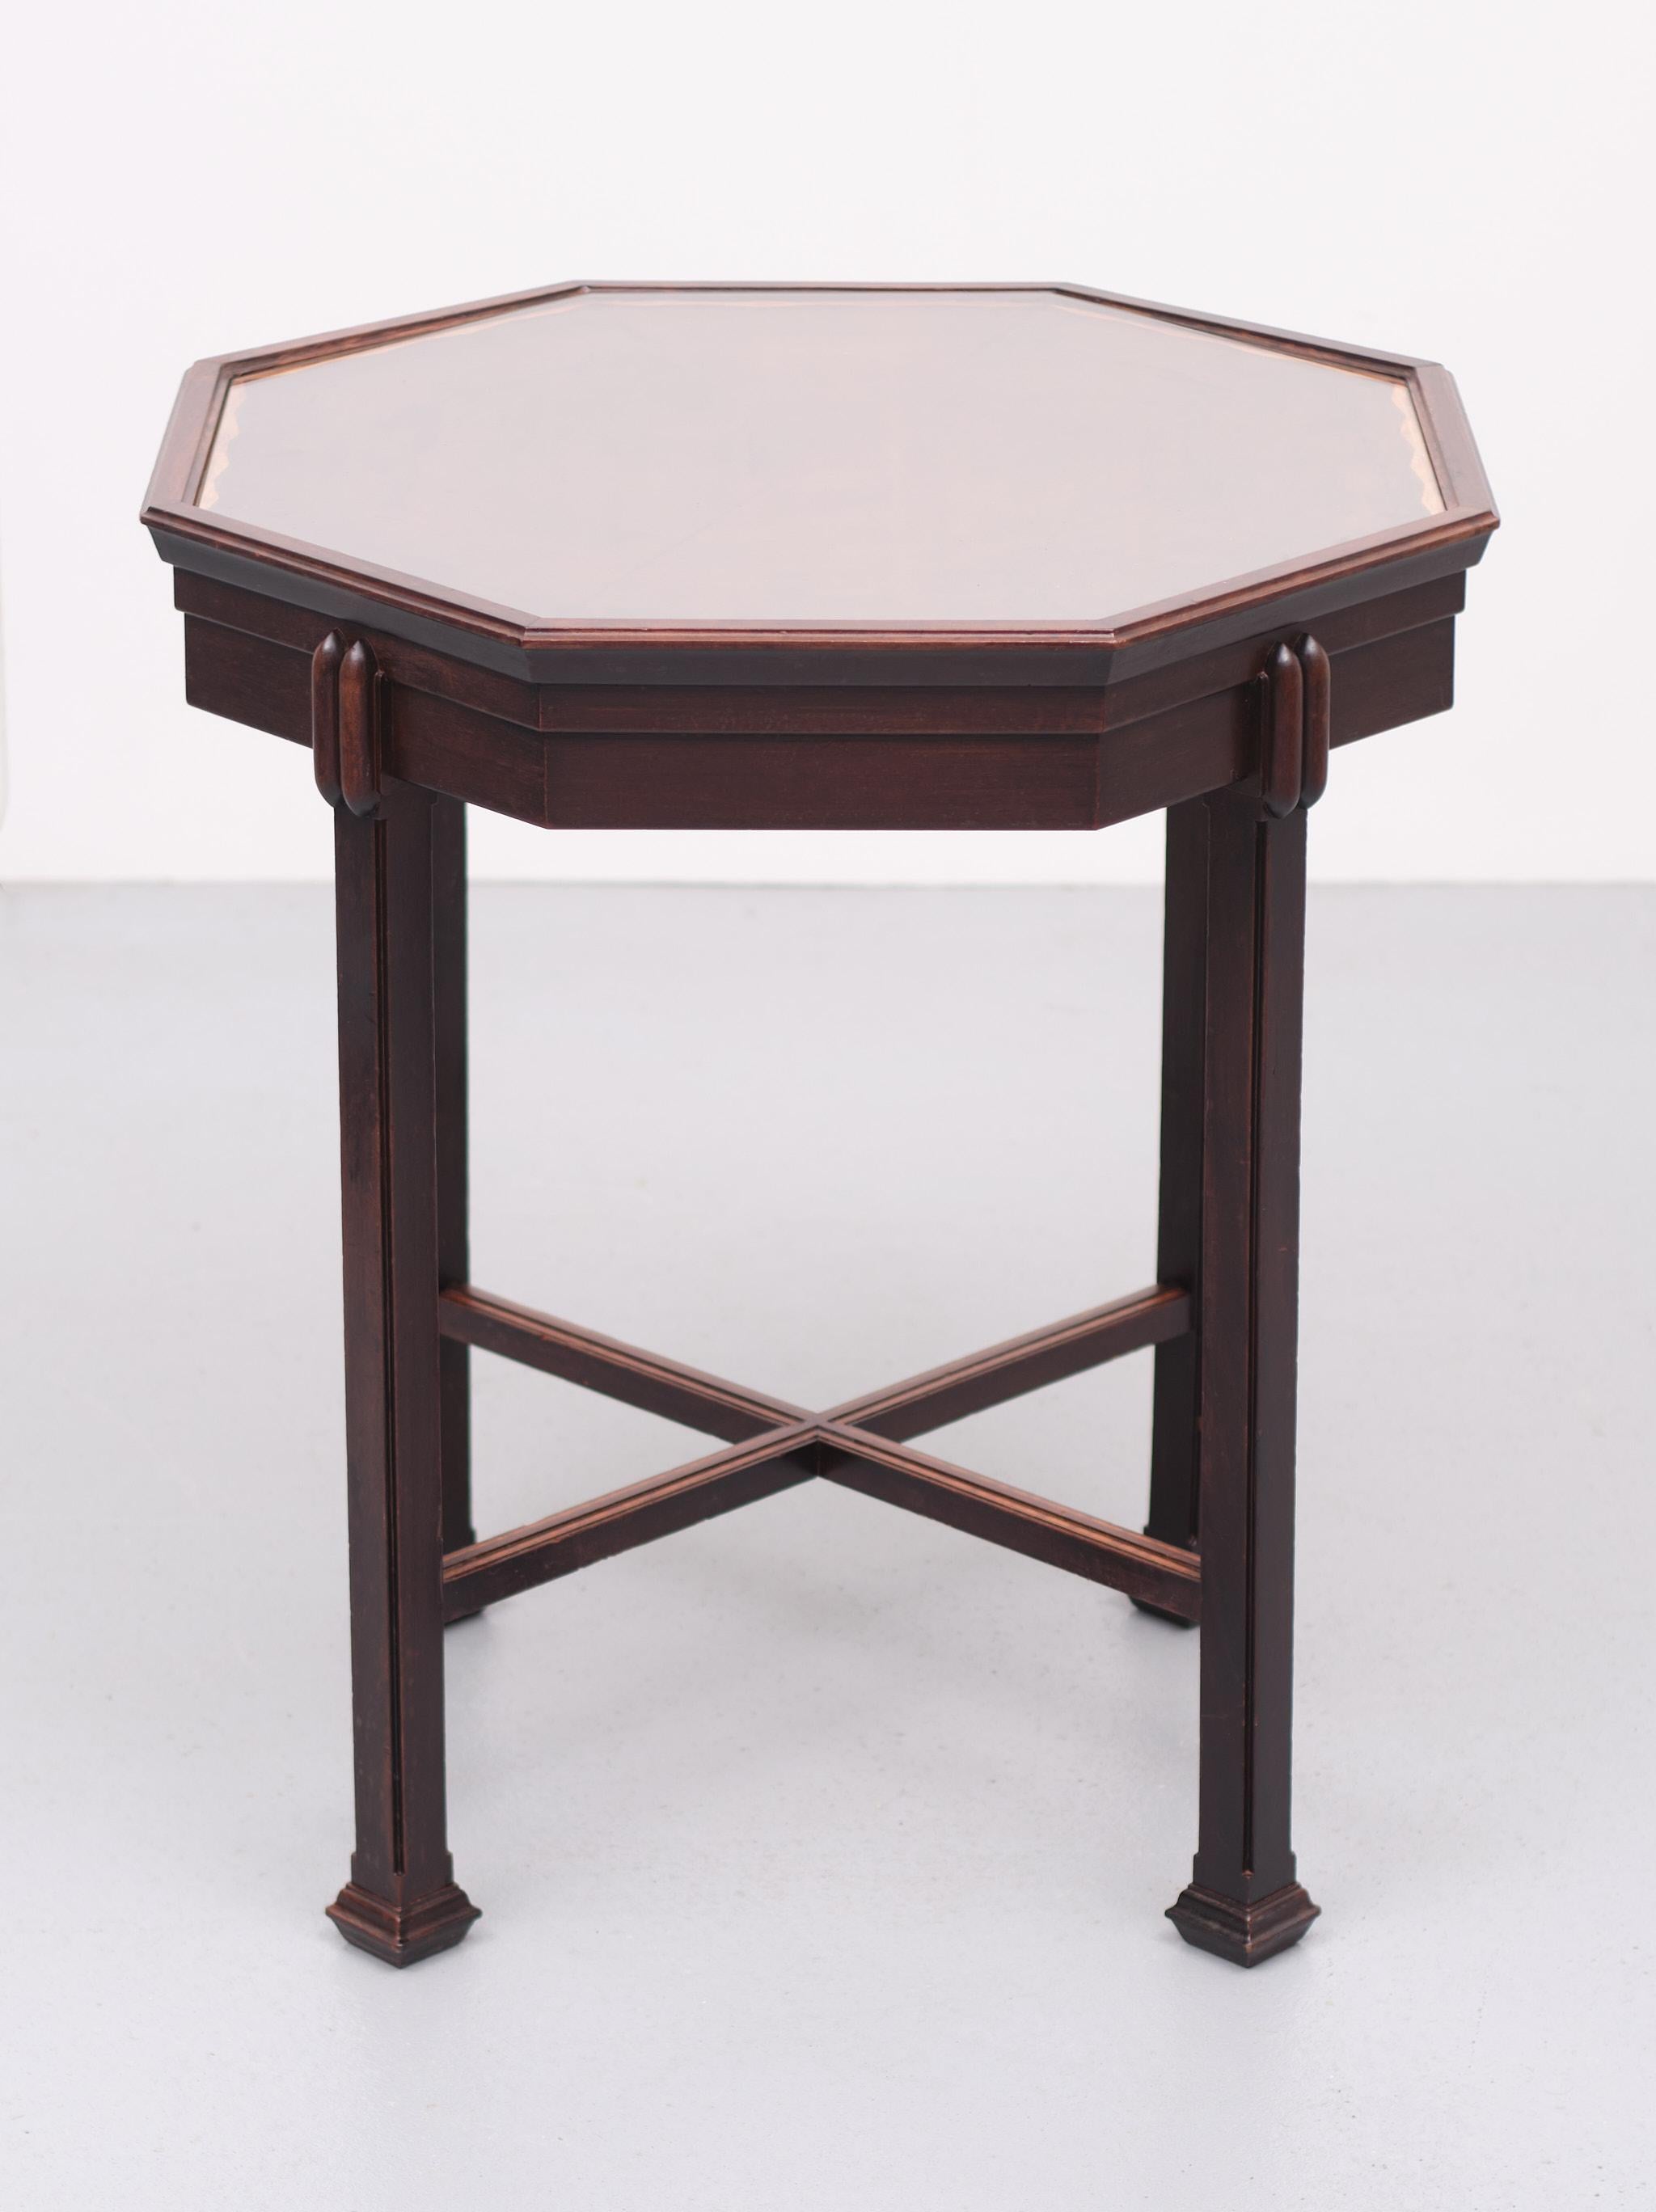 Dutch Art Deco Octagonal Mahogany Side Table 1925 For Sale 3